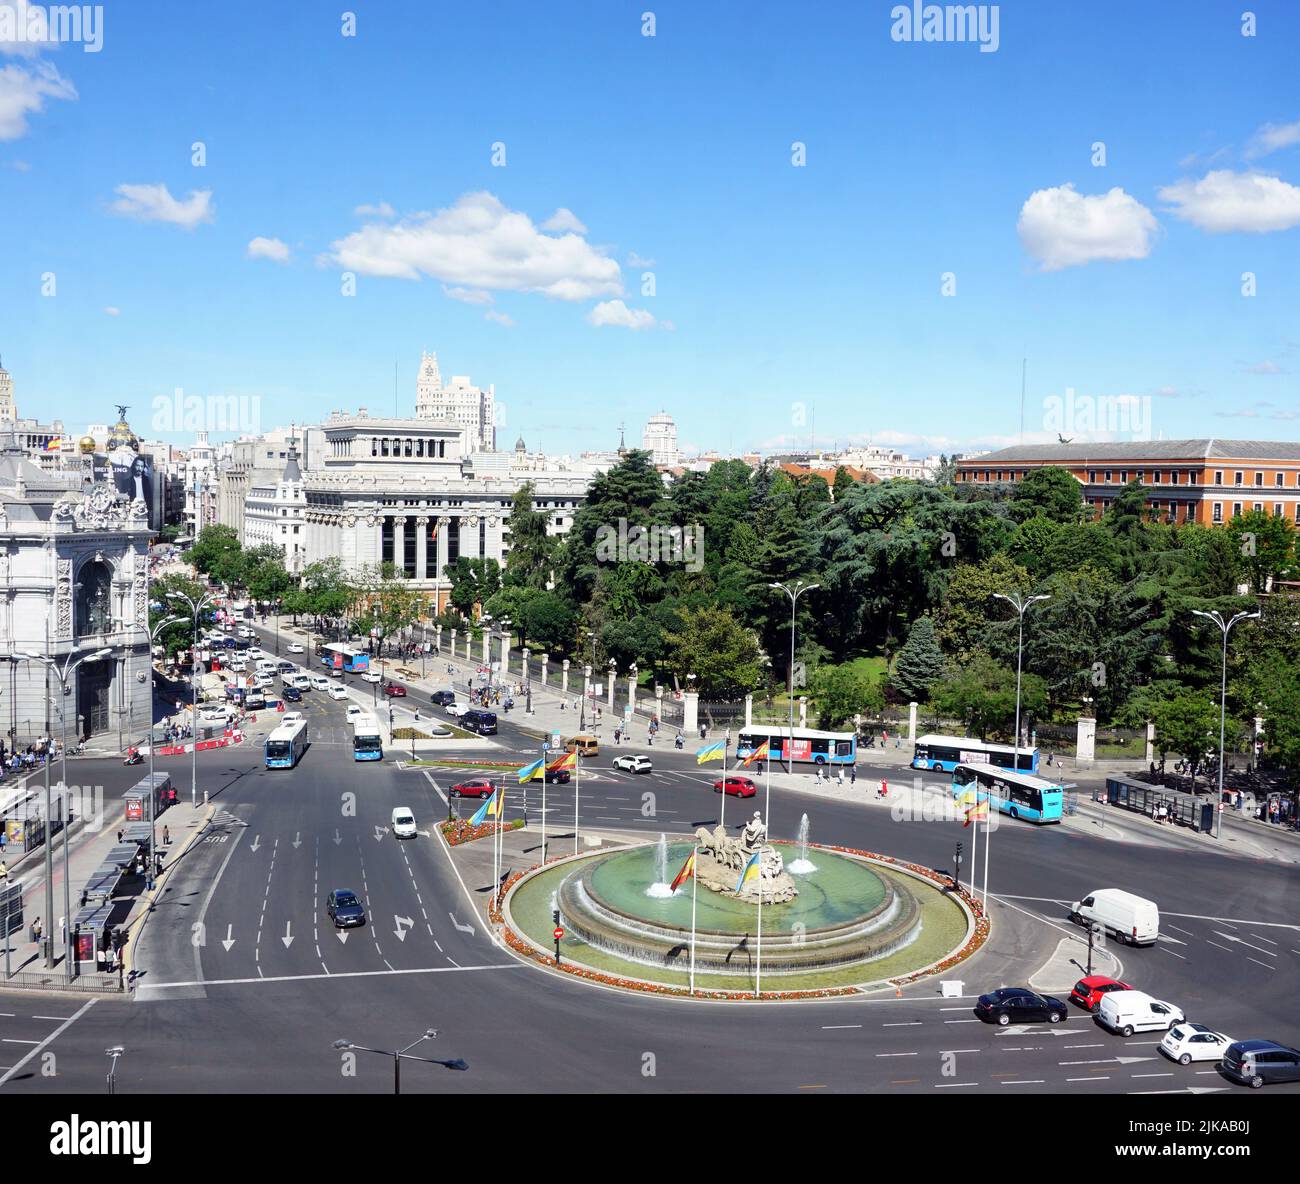 The Plaza de Cibeles in Madrid Spain. Stock Photo